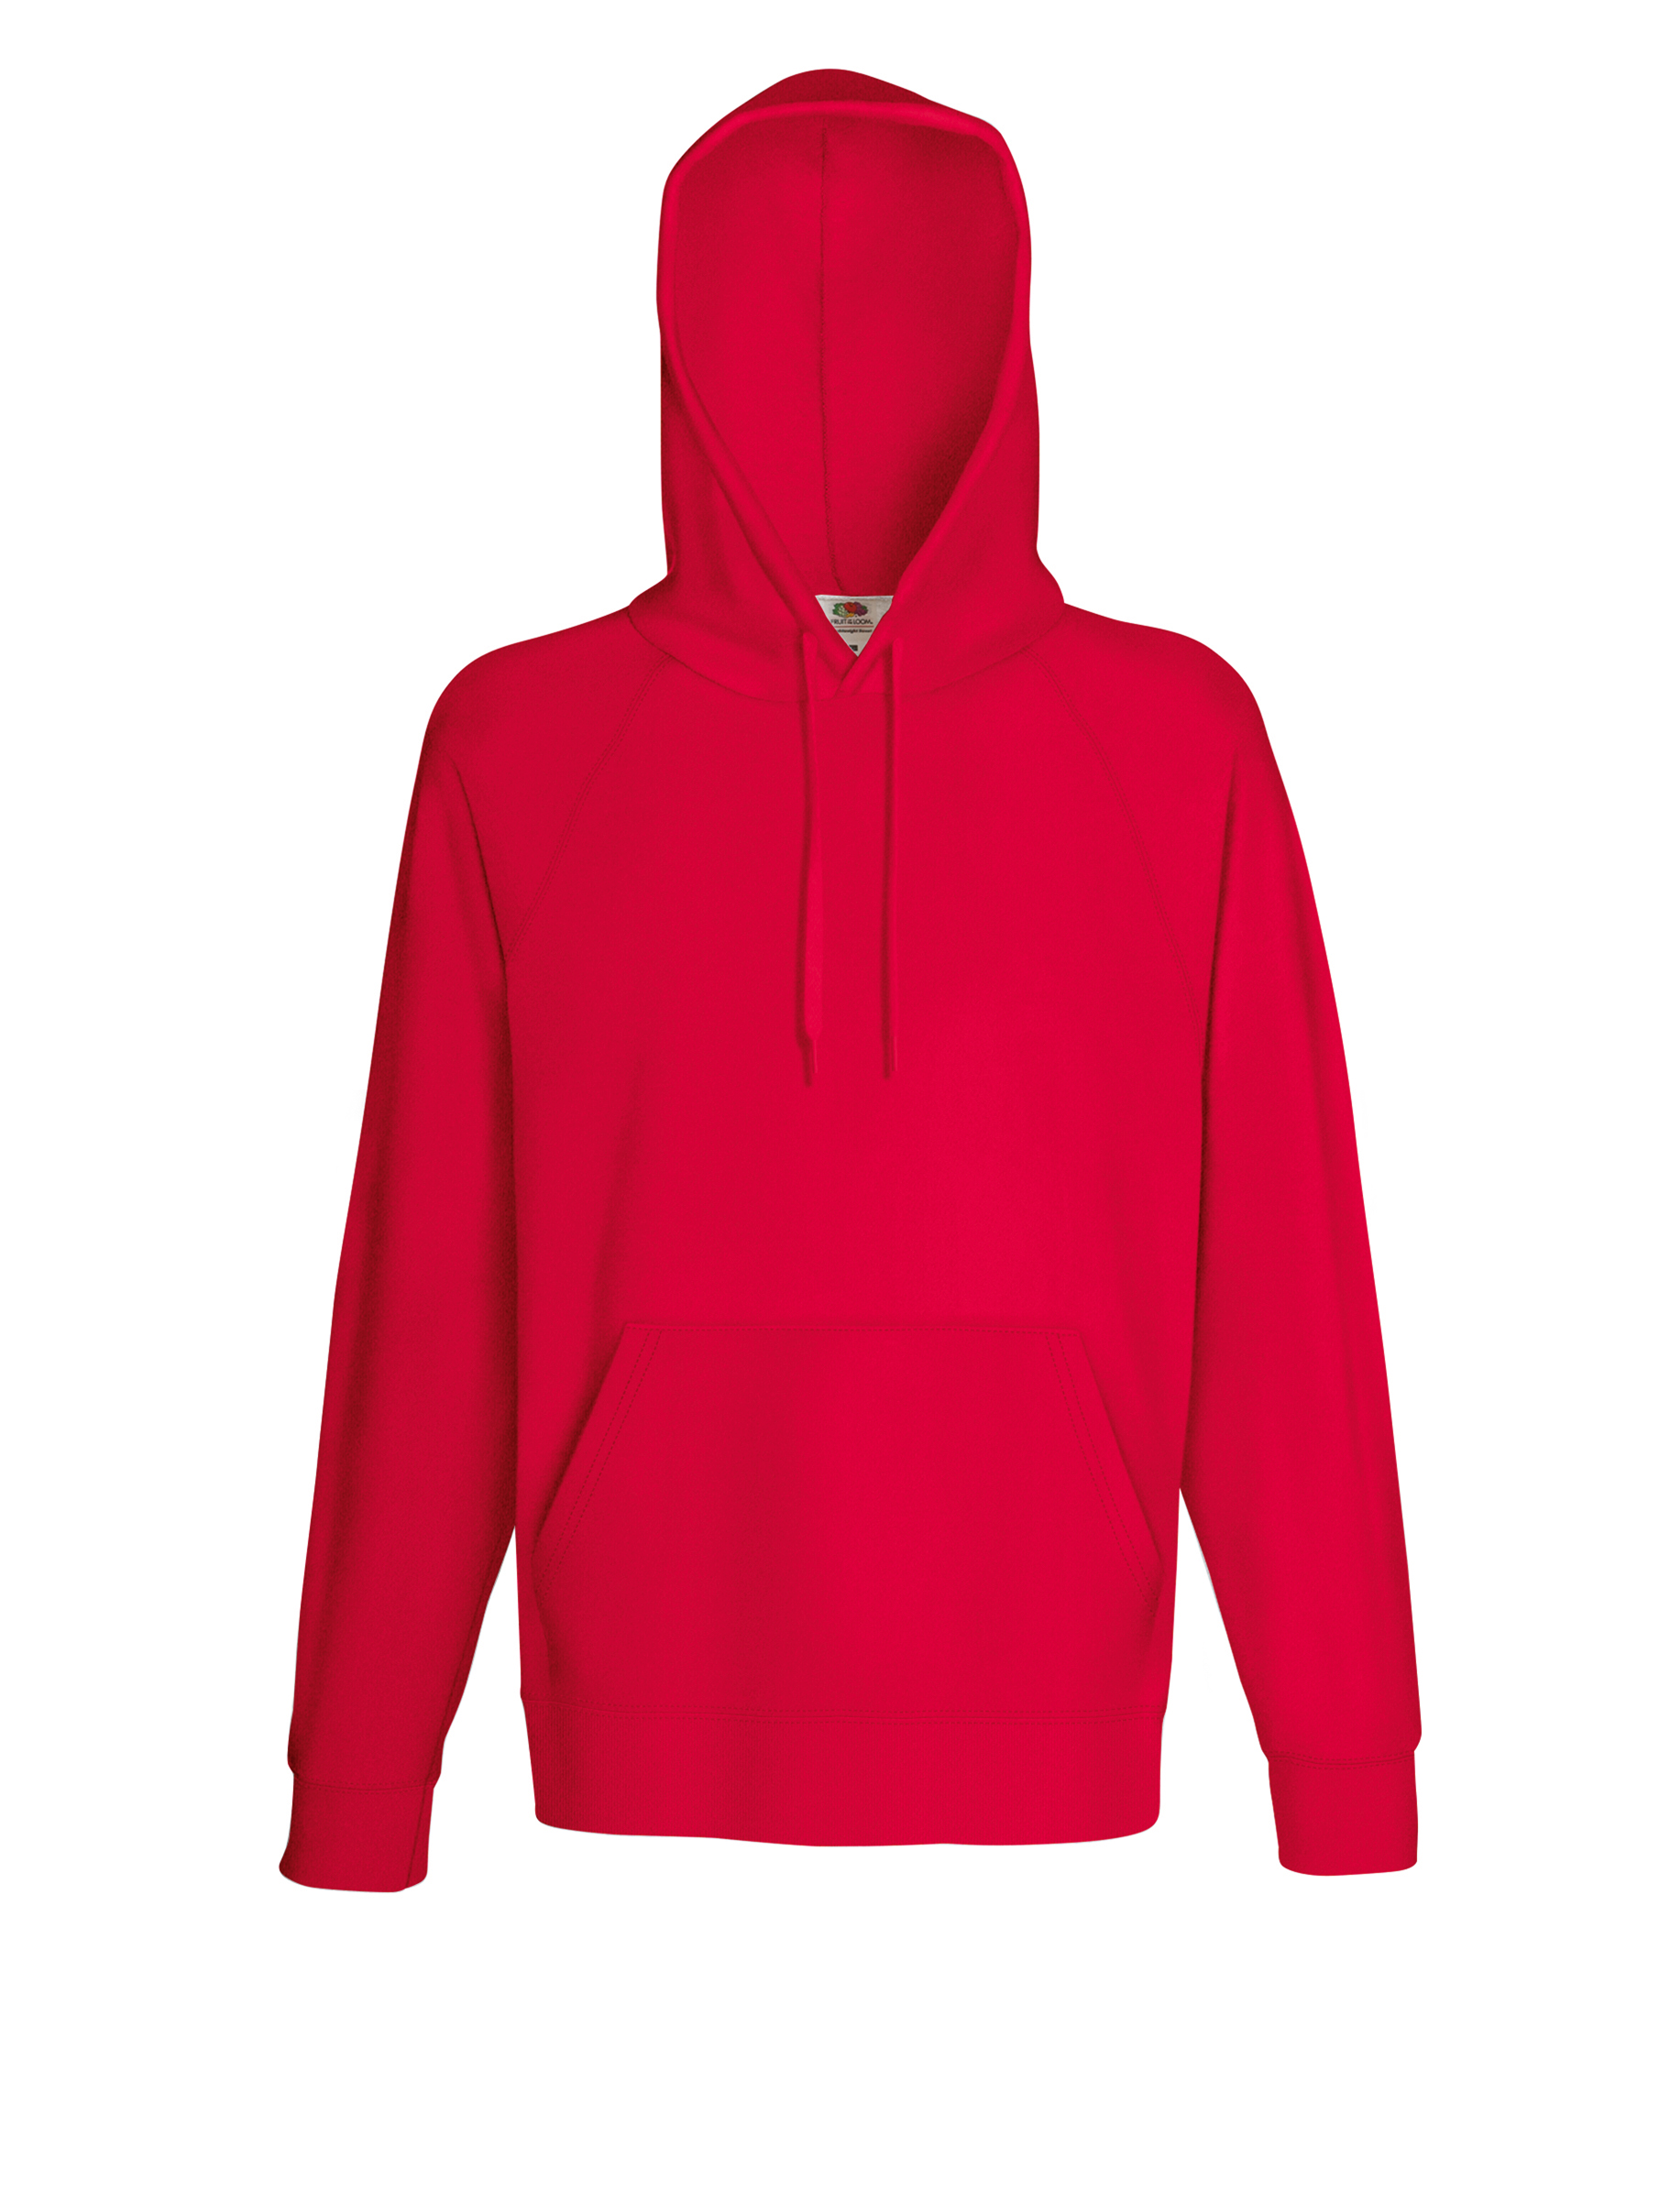 ax-httpswebsystems.s3.amazonaws.comtmp_for_downloadfruit-of-the-loom-lightweight-hooded-sweatshirt-red.jpeg